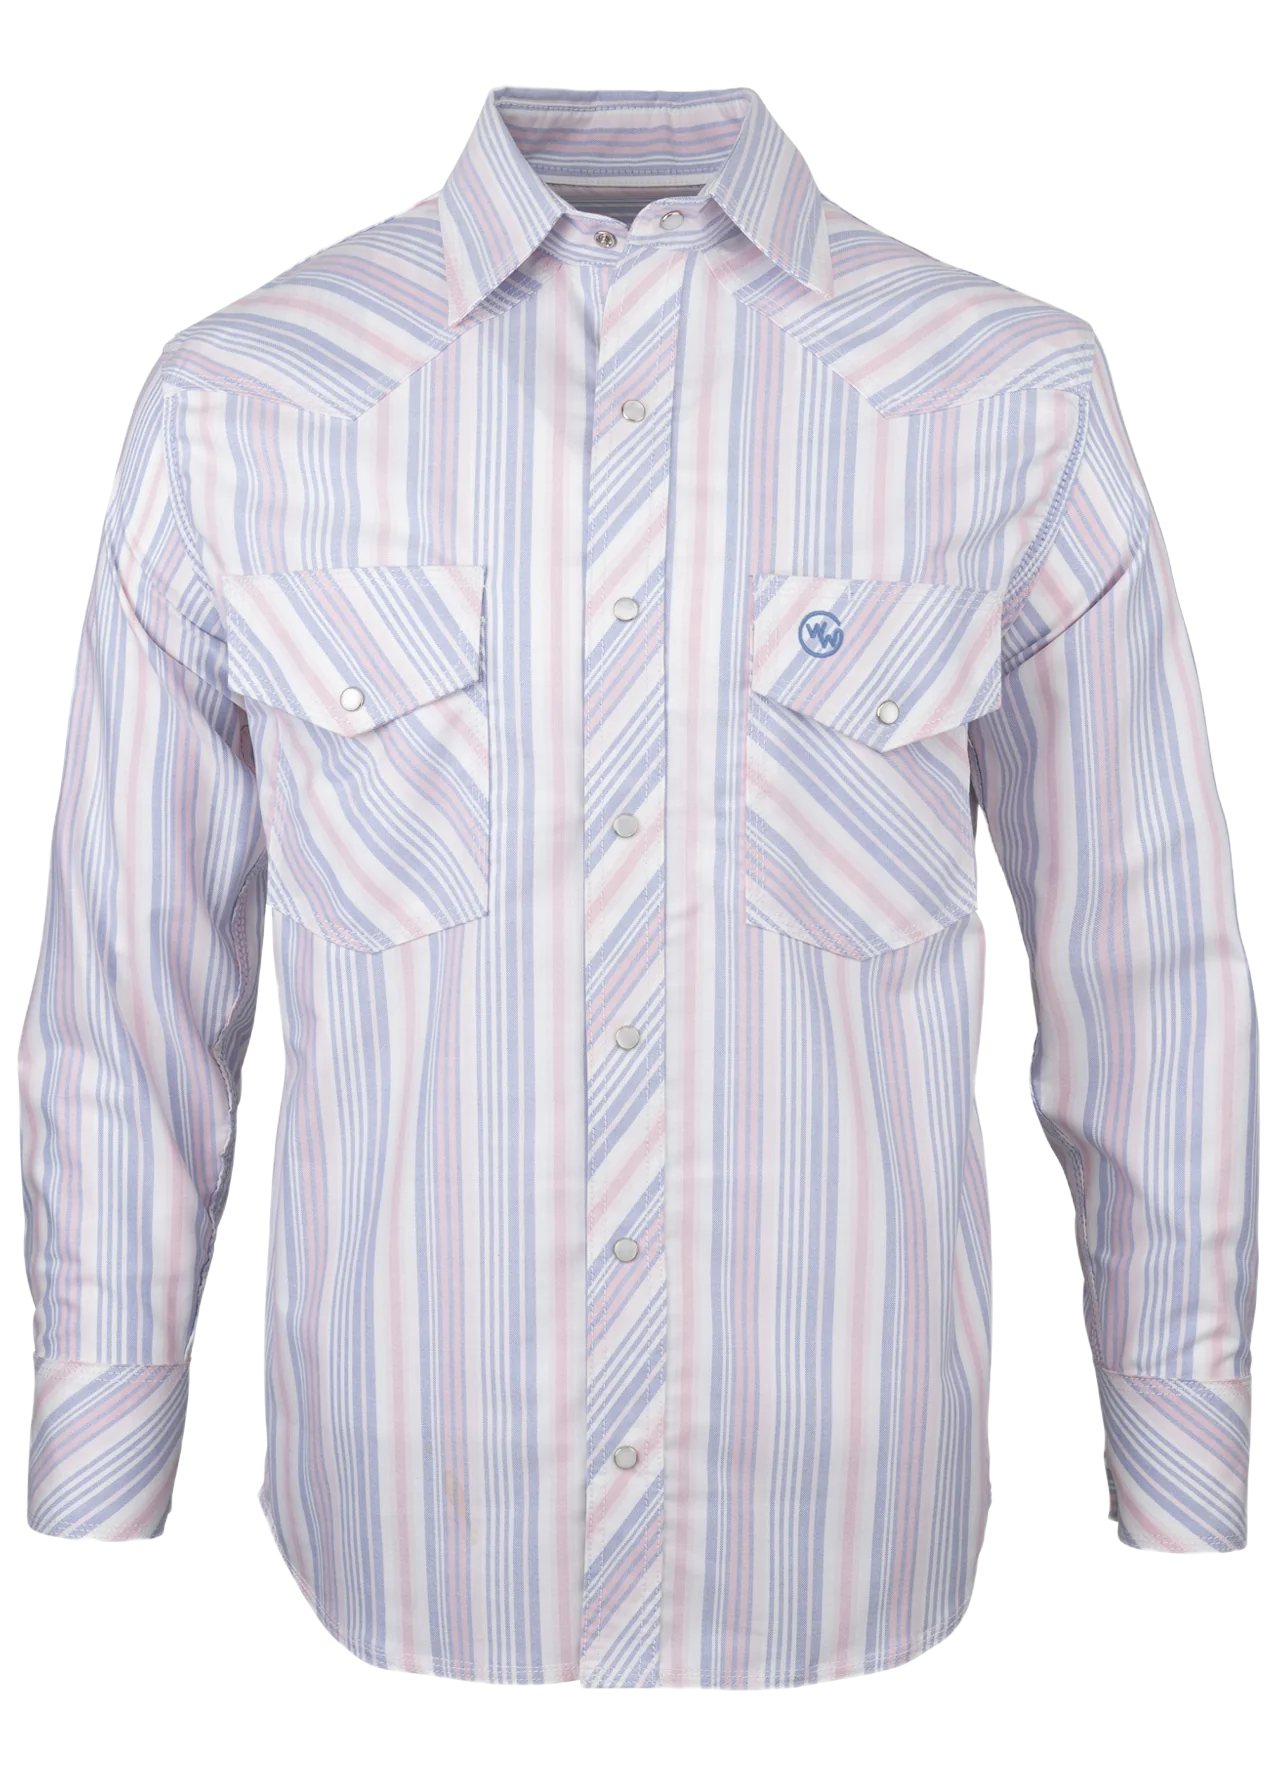 WW Triple Stitched Cotton Striped Shirts (Non FR)